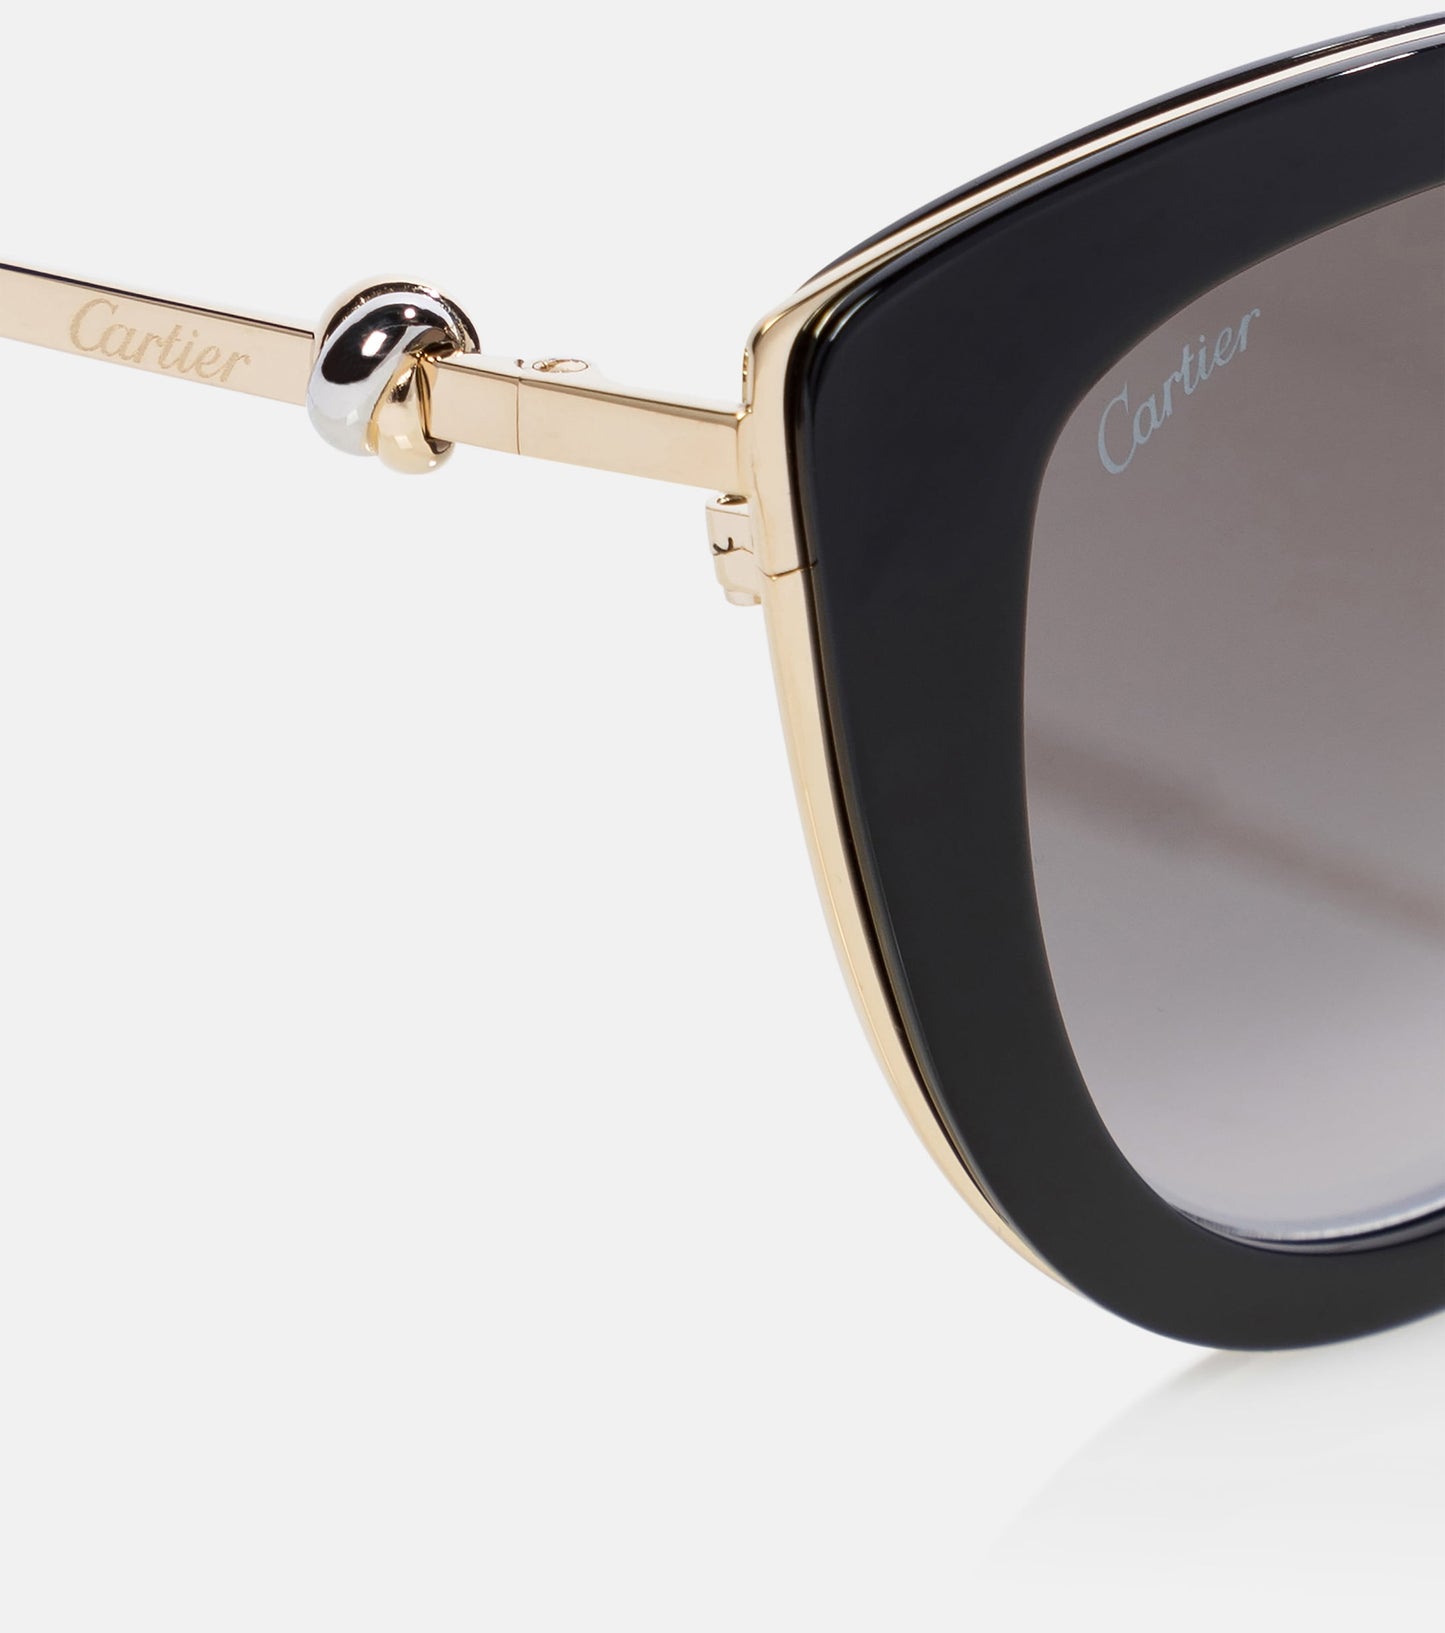 Cartier CT0247S-001 54mm New Sunglasses